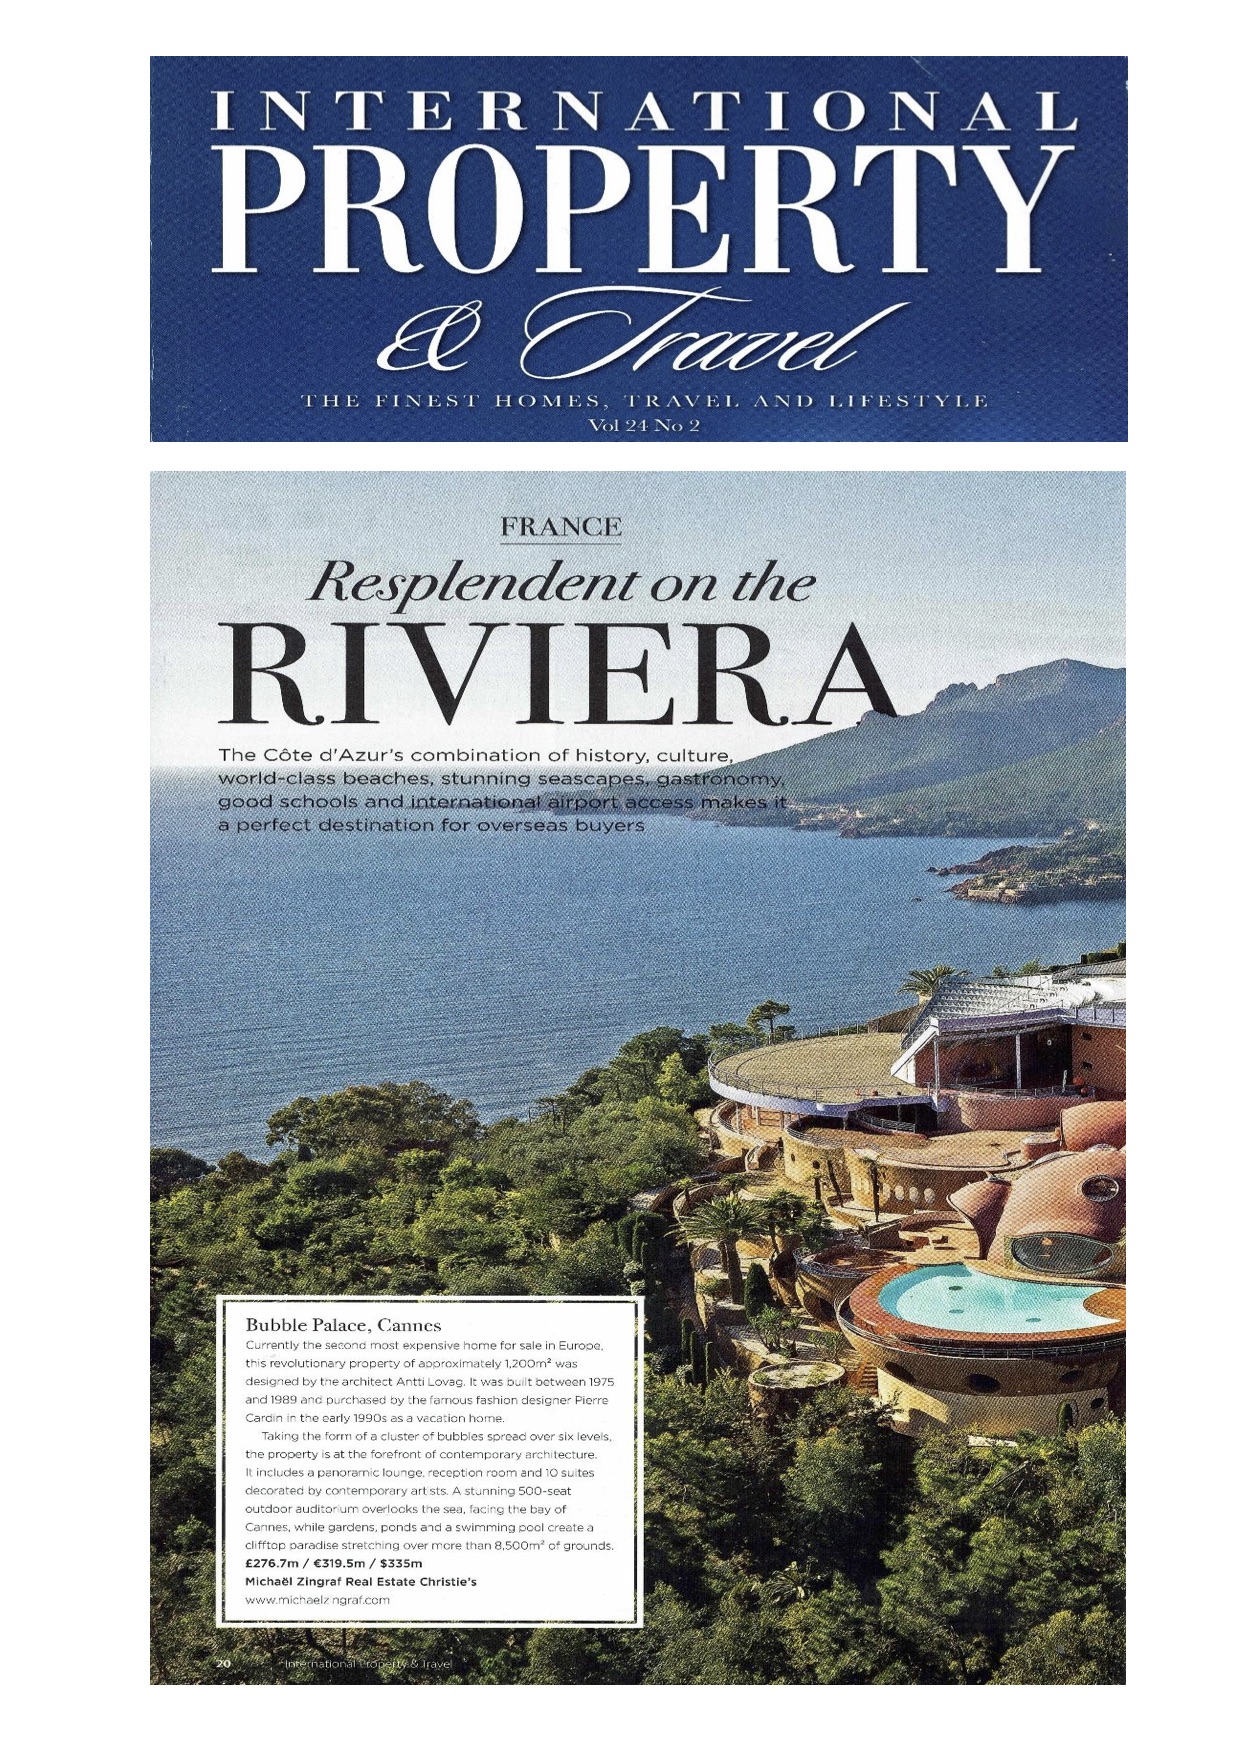 International Property & Travel Magazine – Riviera Property